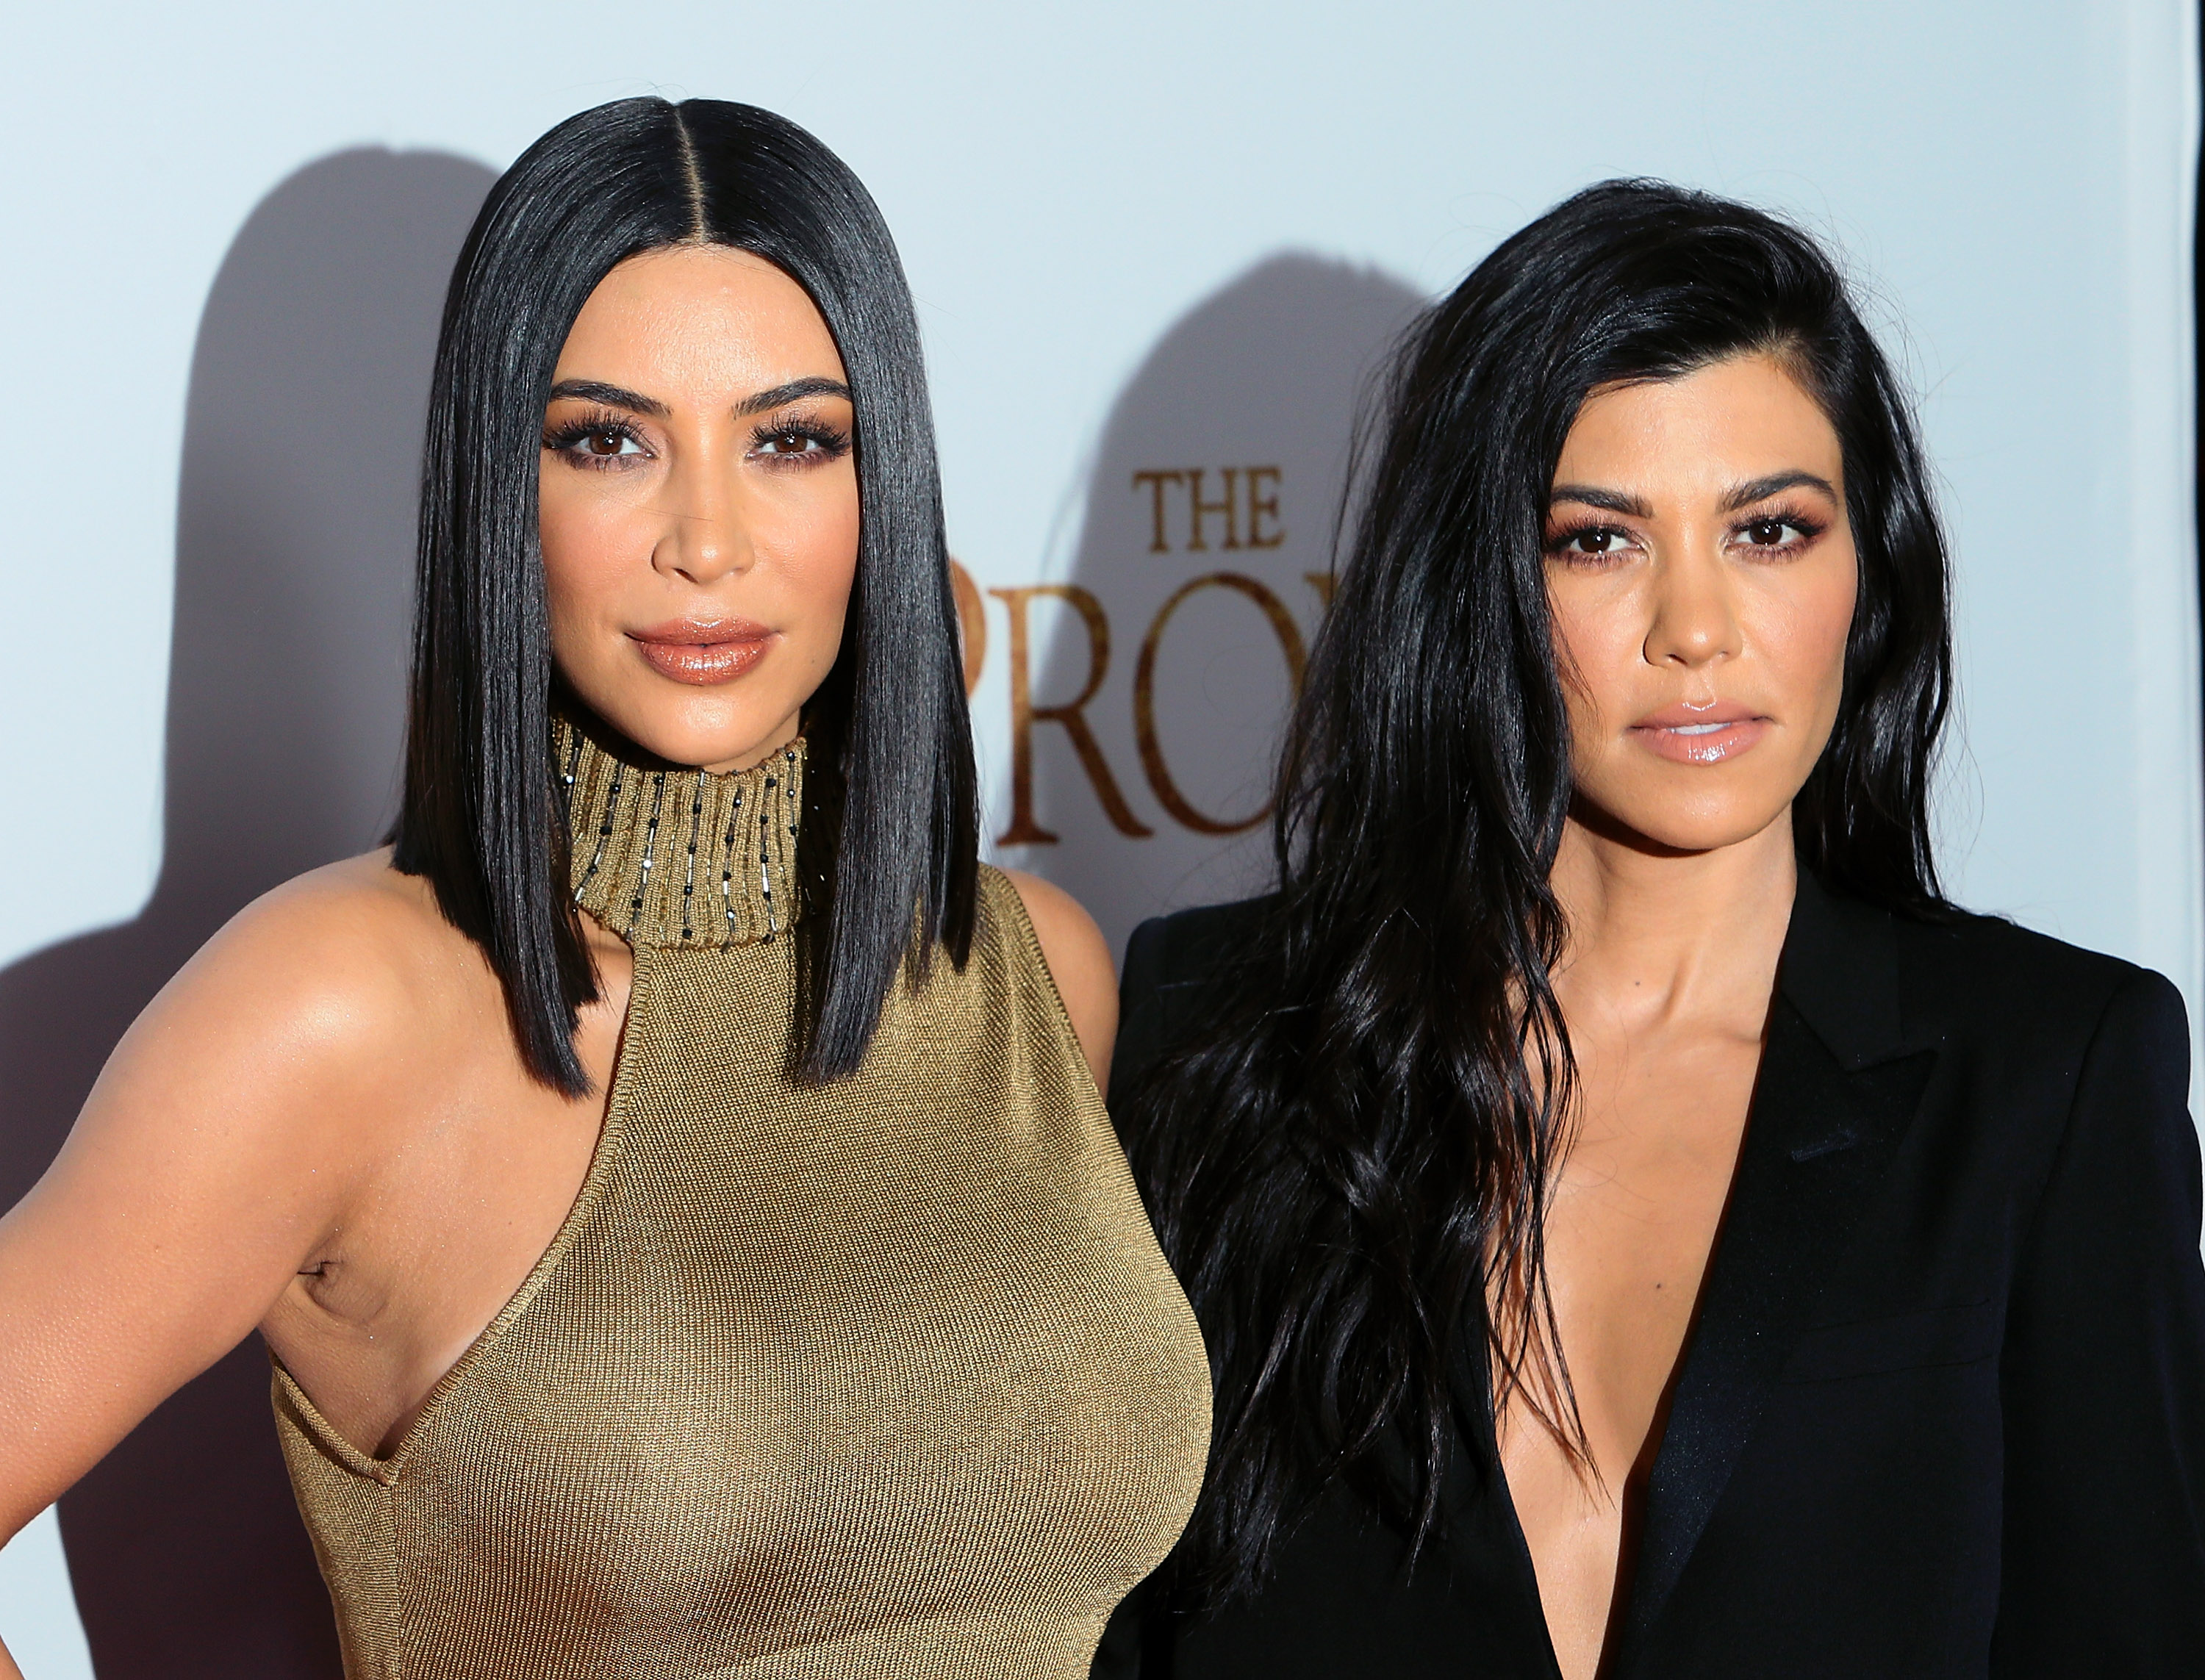 Kim Kardashian West and Kourtney Kardashian pose together on the carpet at the premiere of Open Road Films